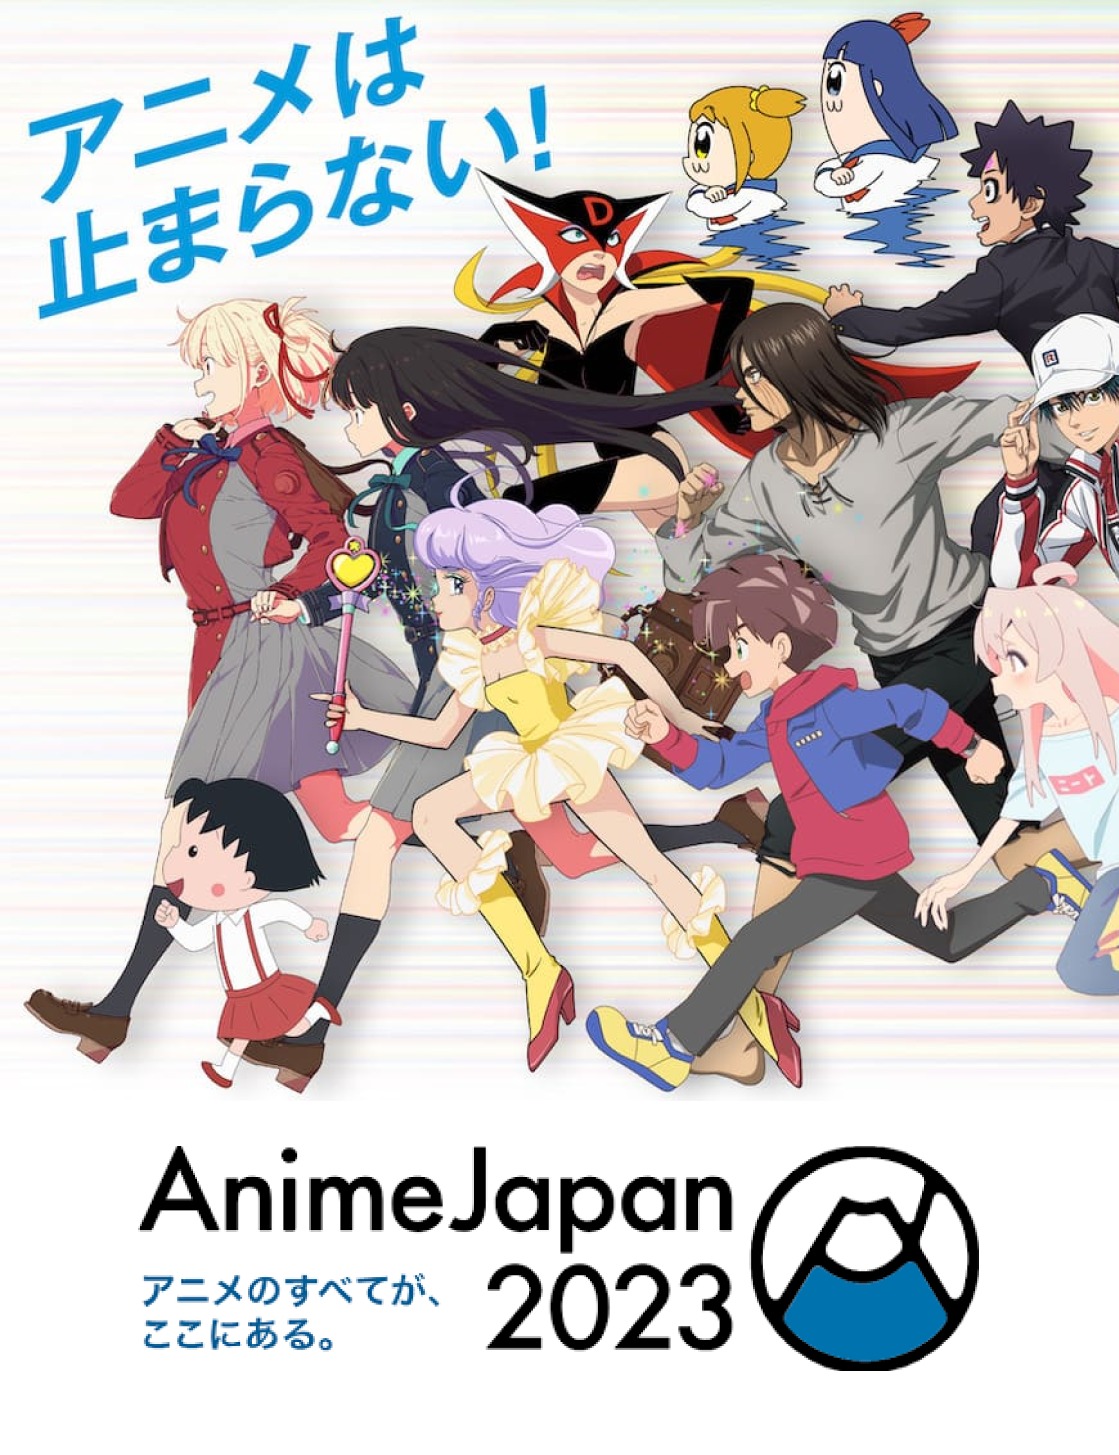 Procreateブースアンバサダー (Anime Japan)